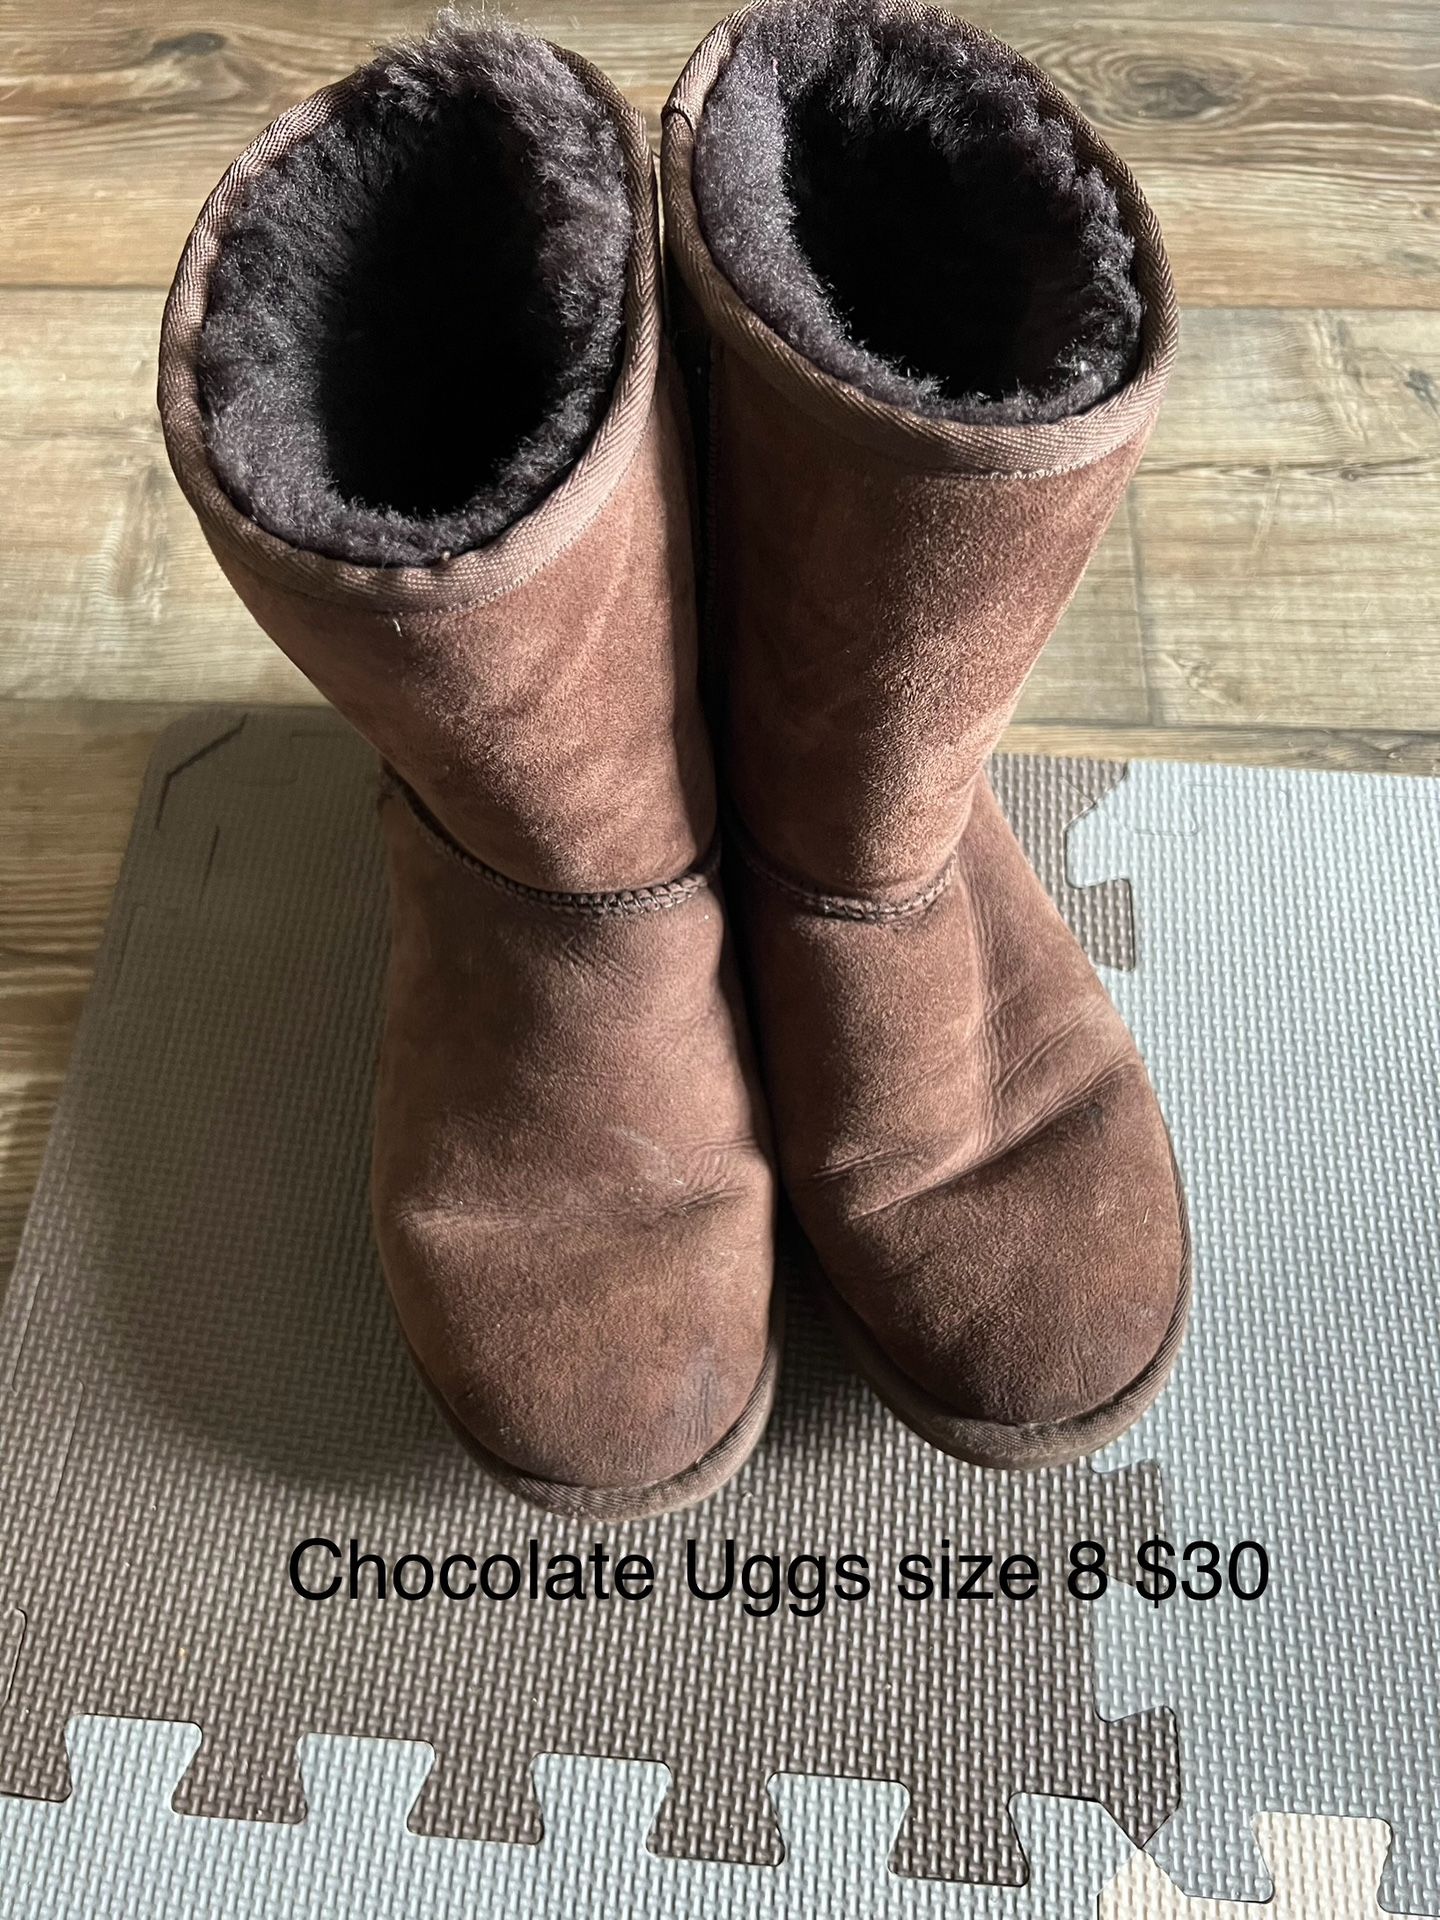 Chocolate Uggs Size 8